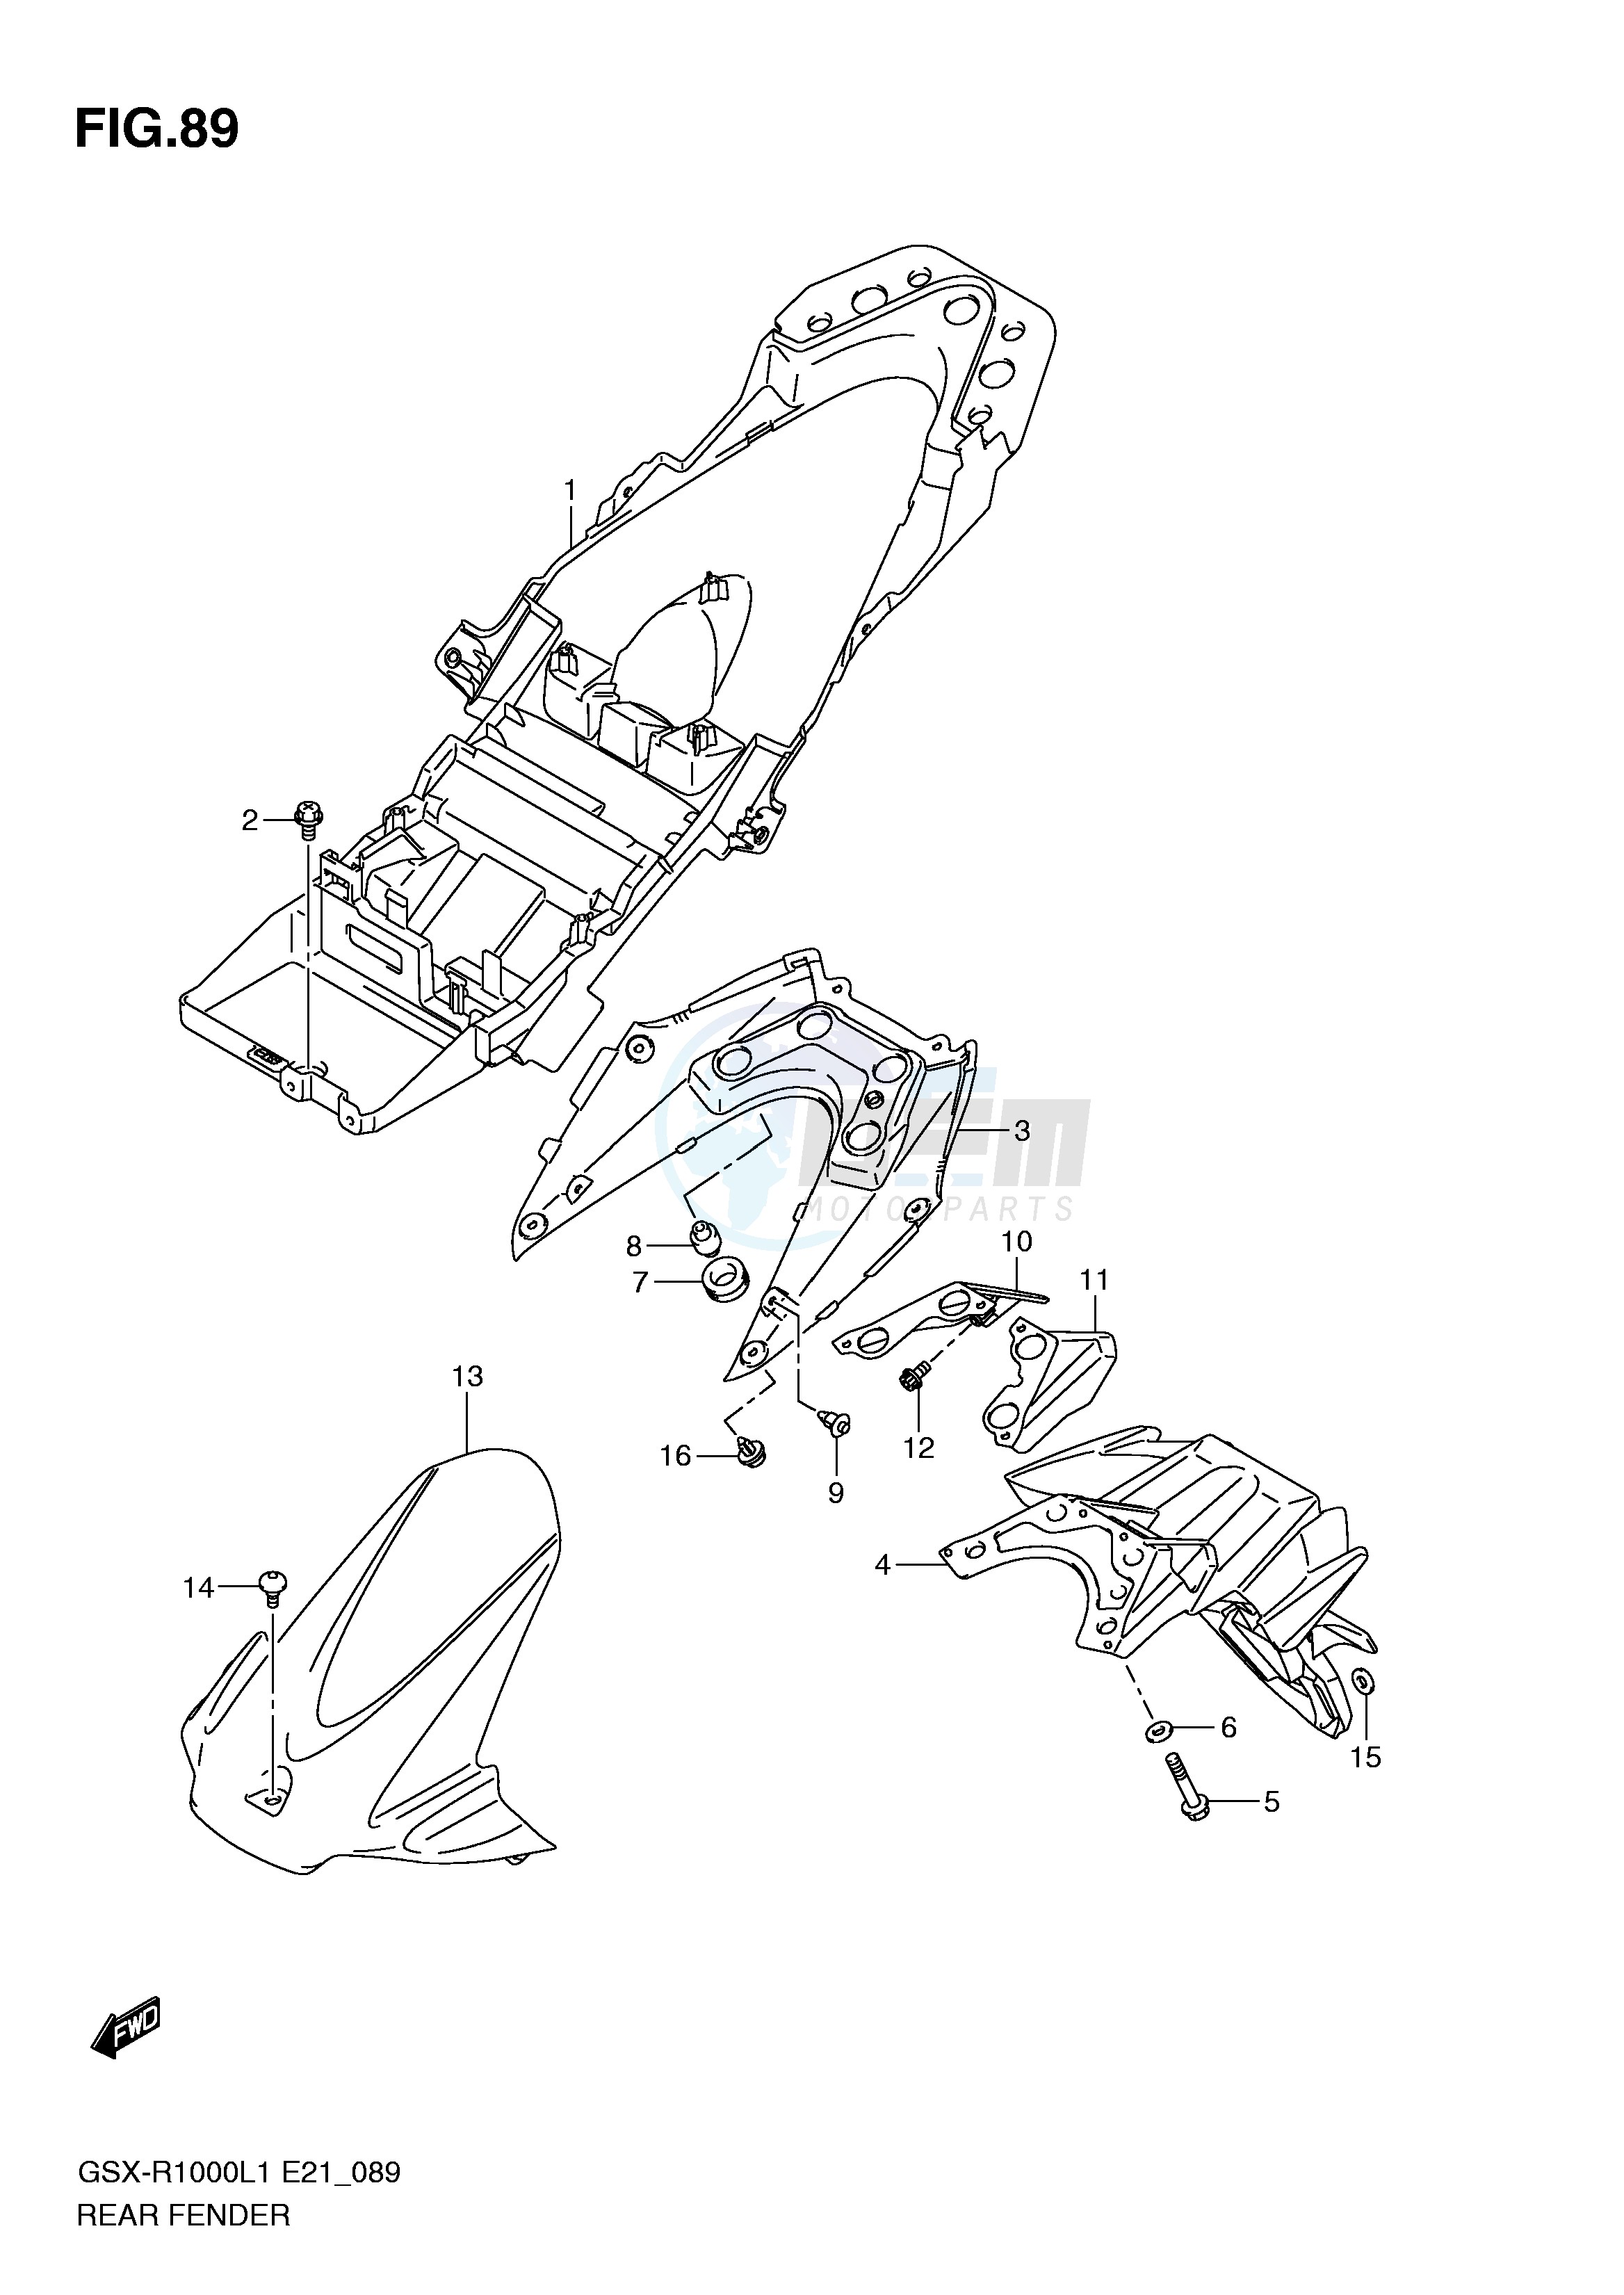 REAR FENDER (GSX-R1000L1 E14) blueprint